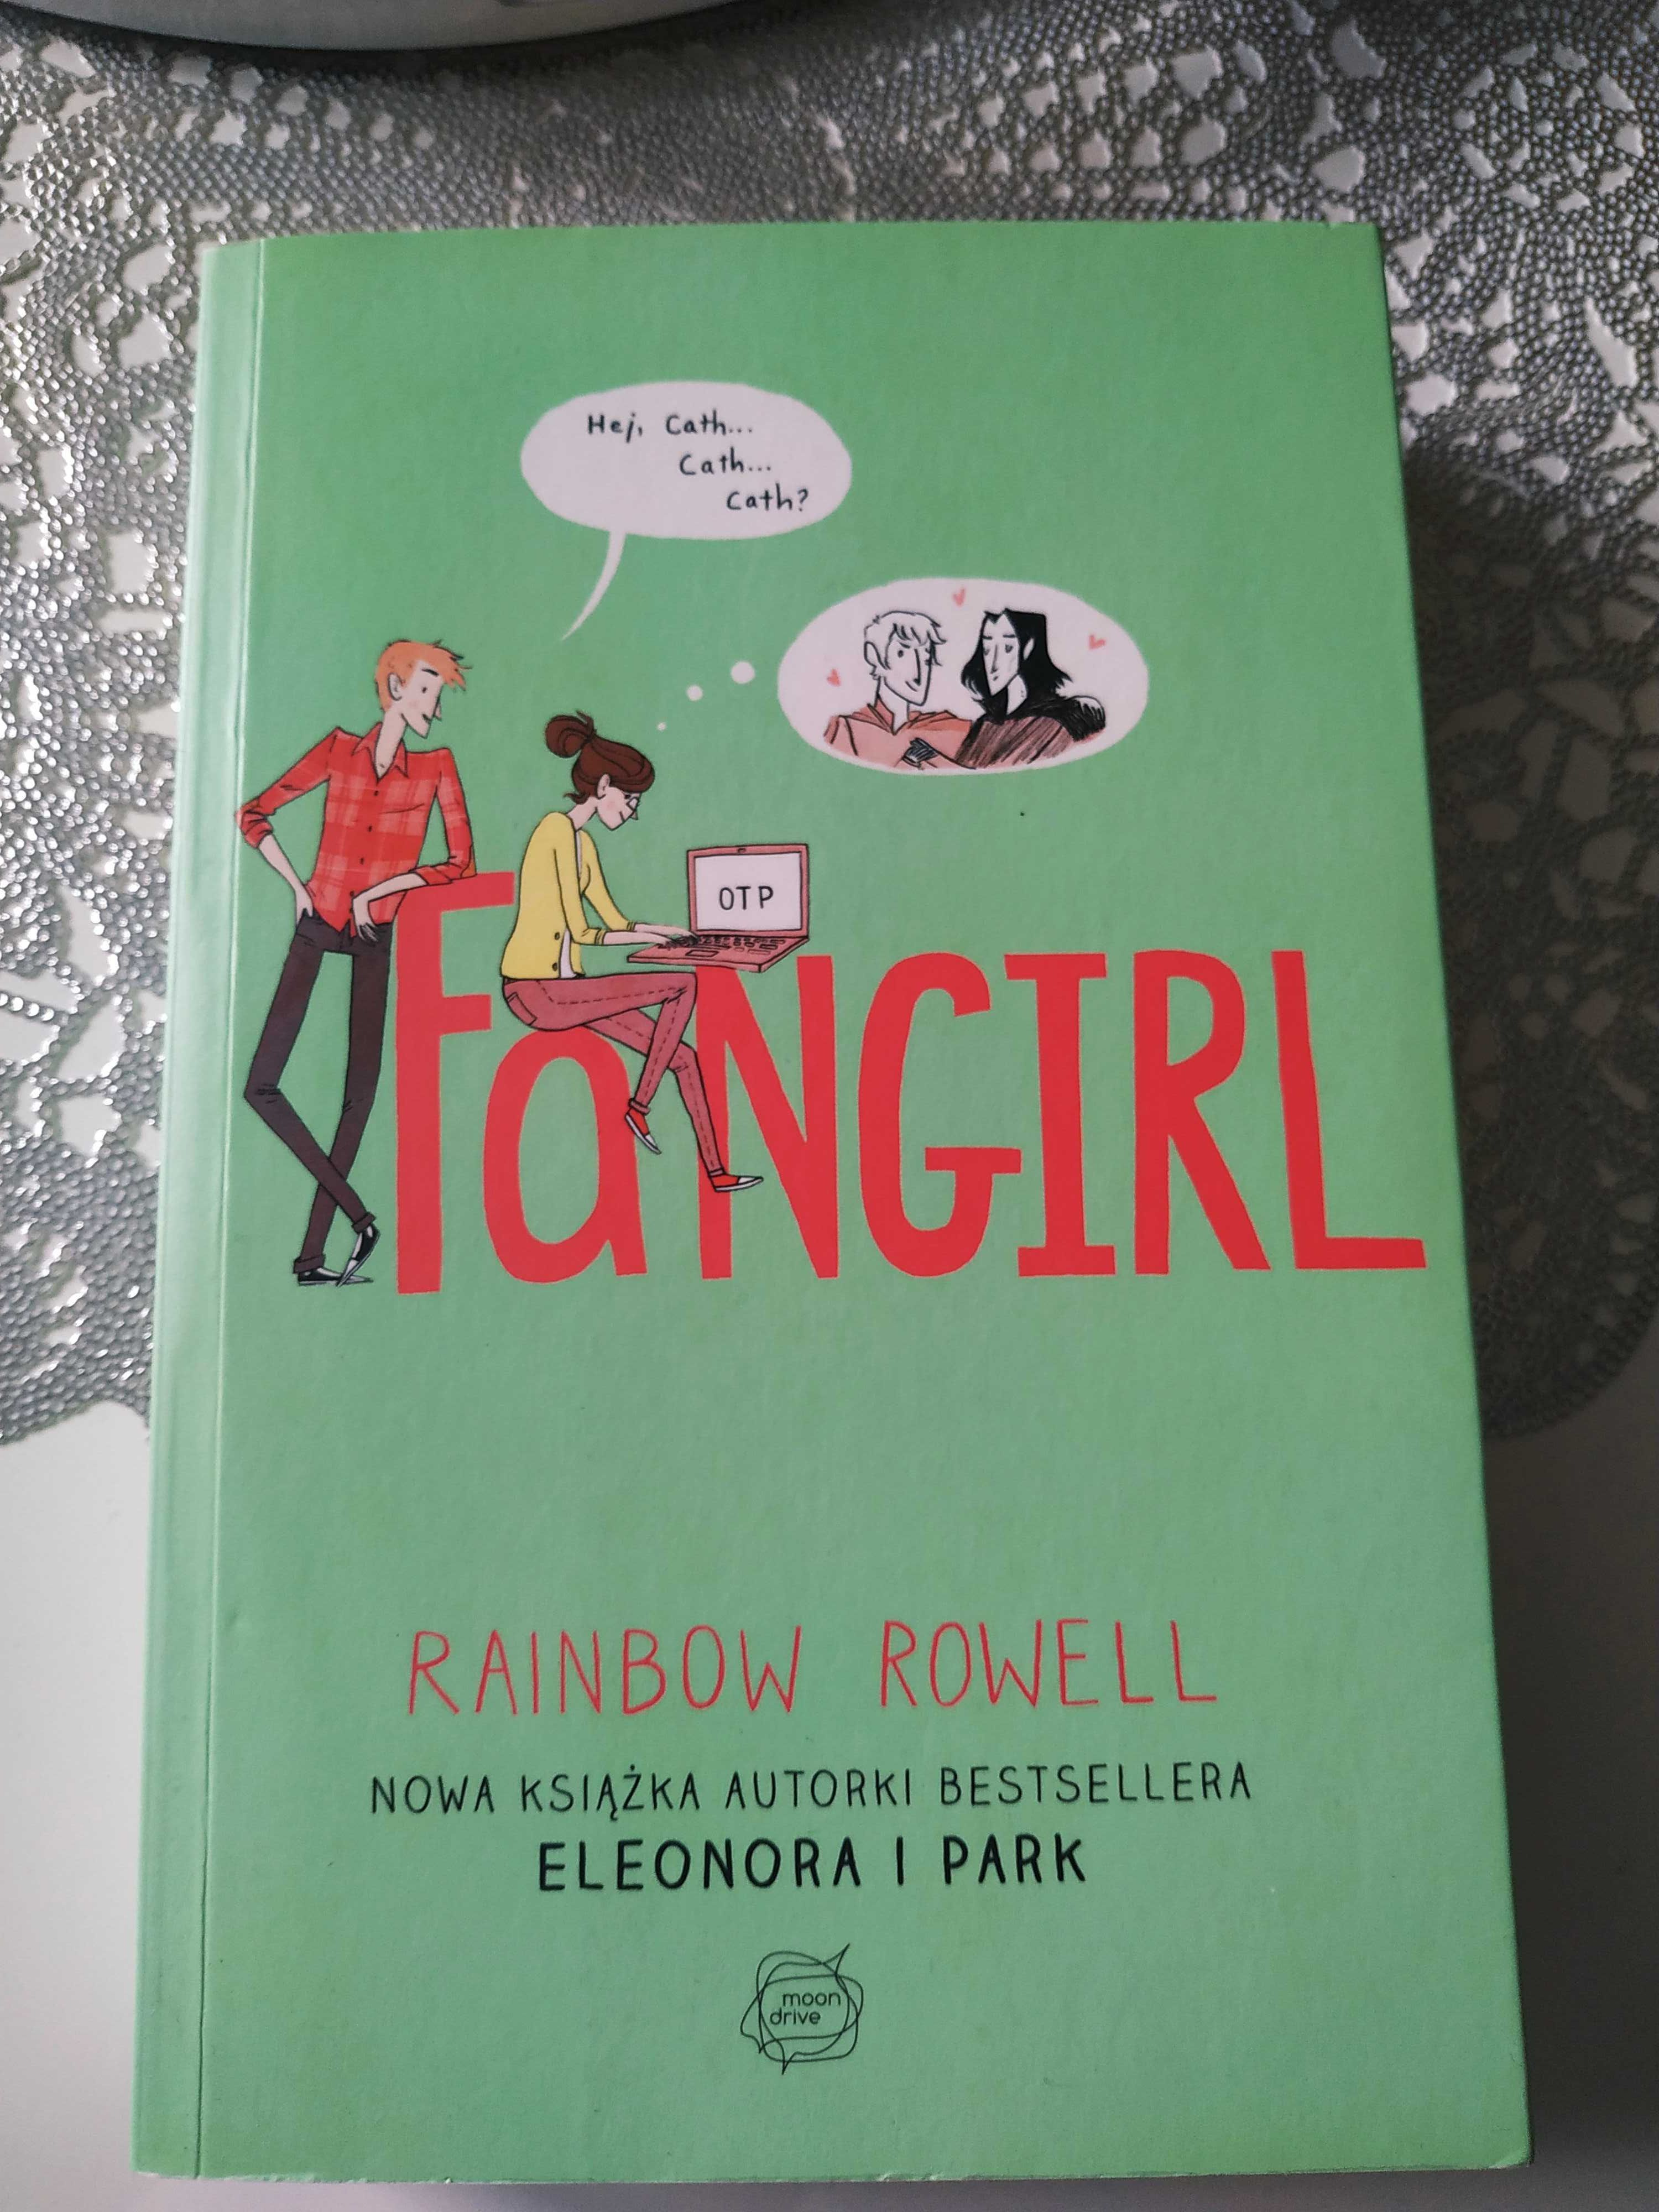 Książka Rainbow Rowell "Fangirl",nowa